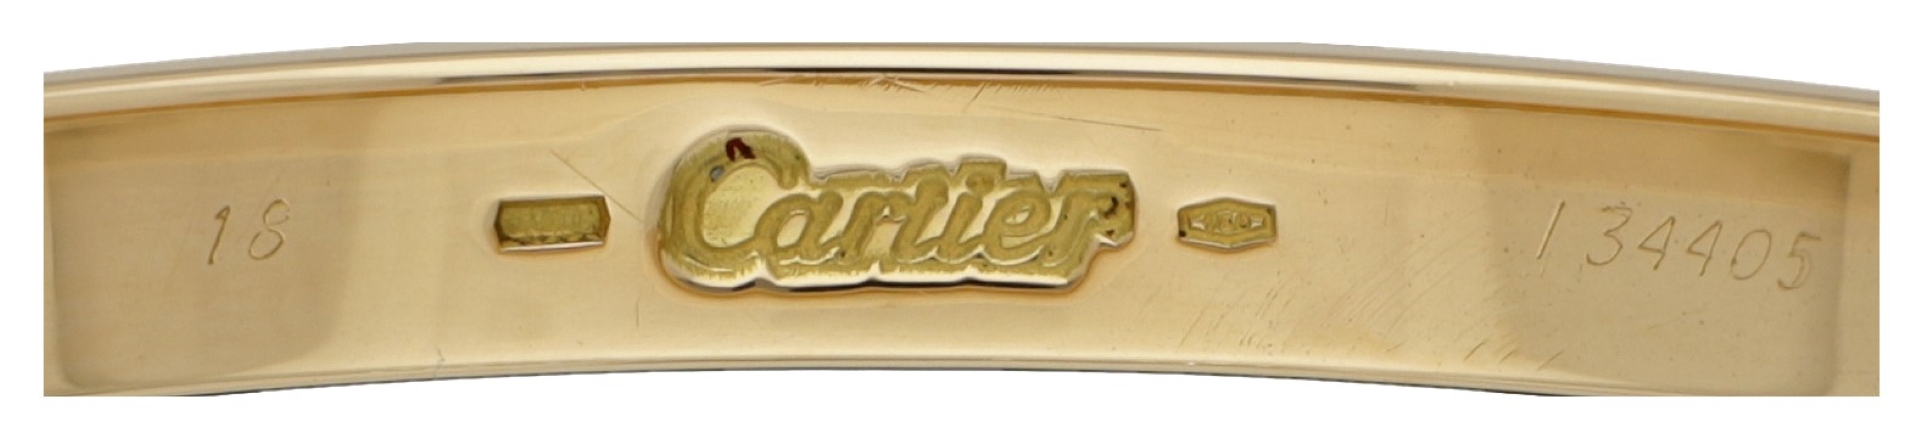 No Reserve - Cartier 18K yellow gold Love bracelet. - Image 3 of 4